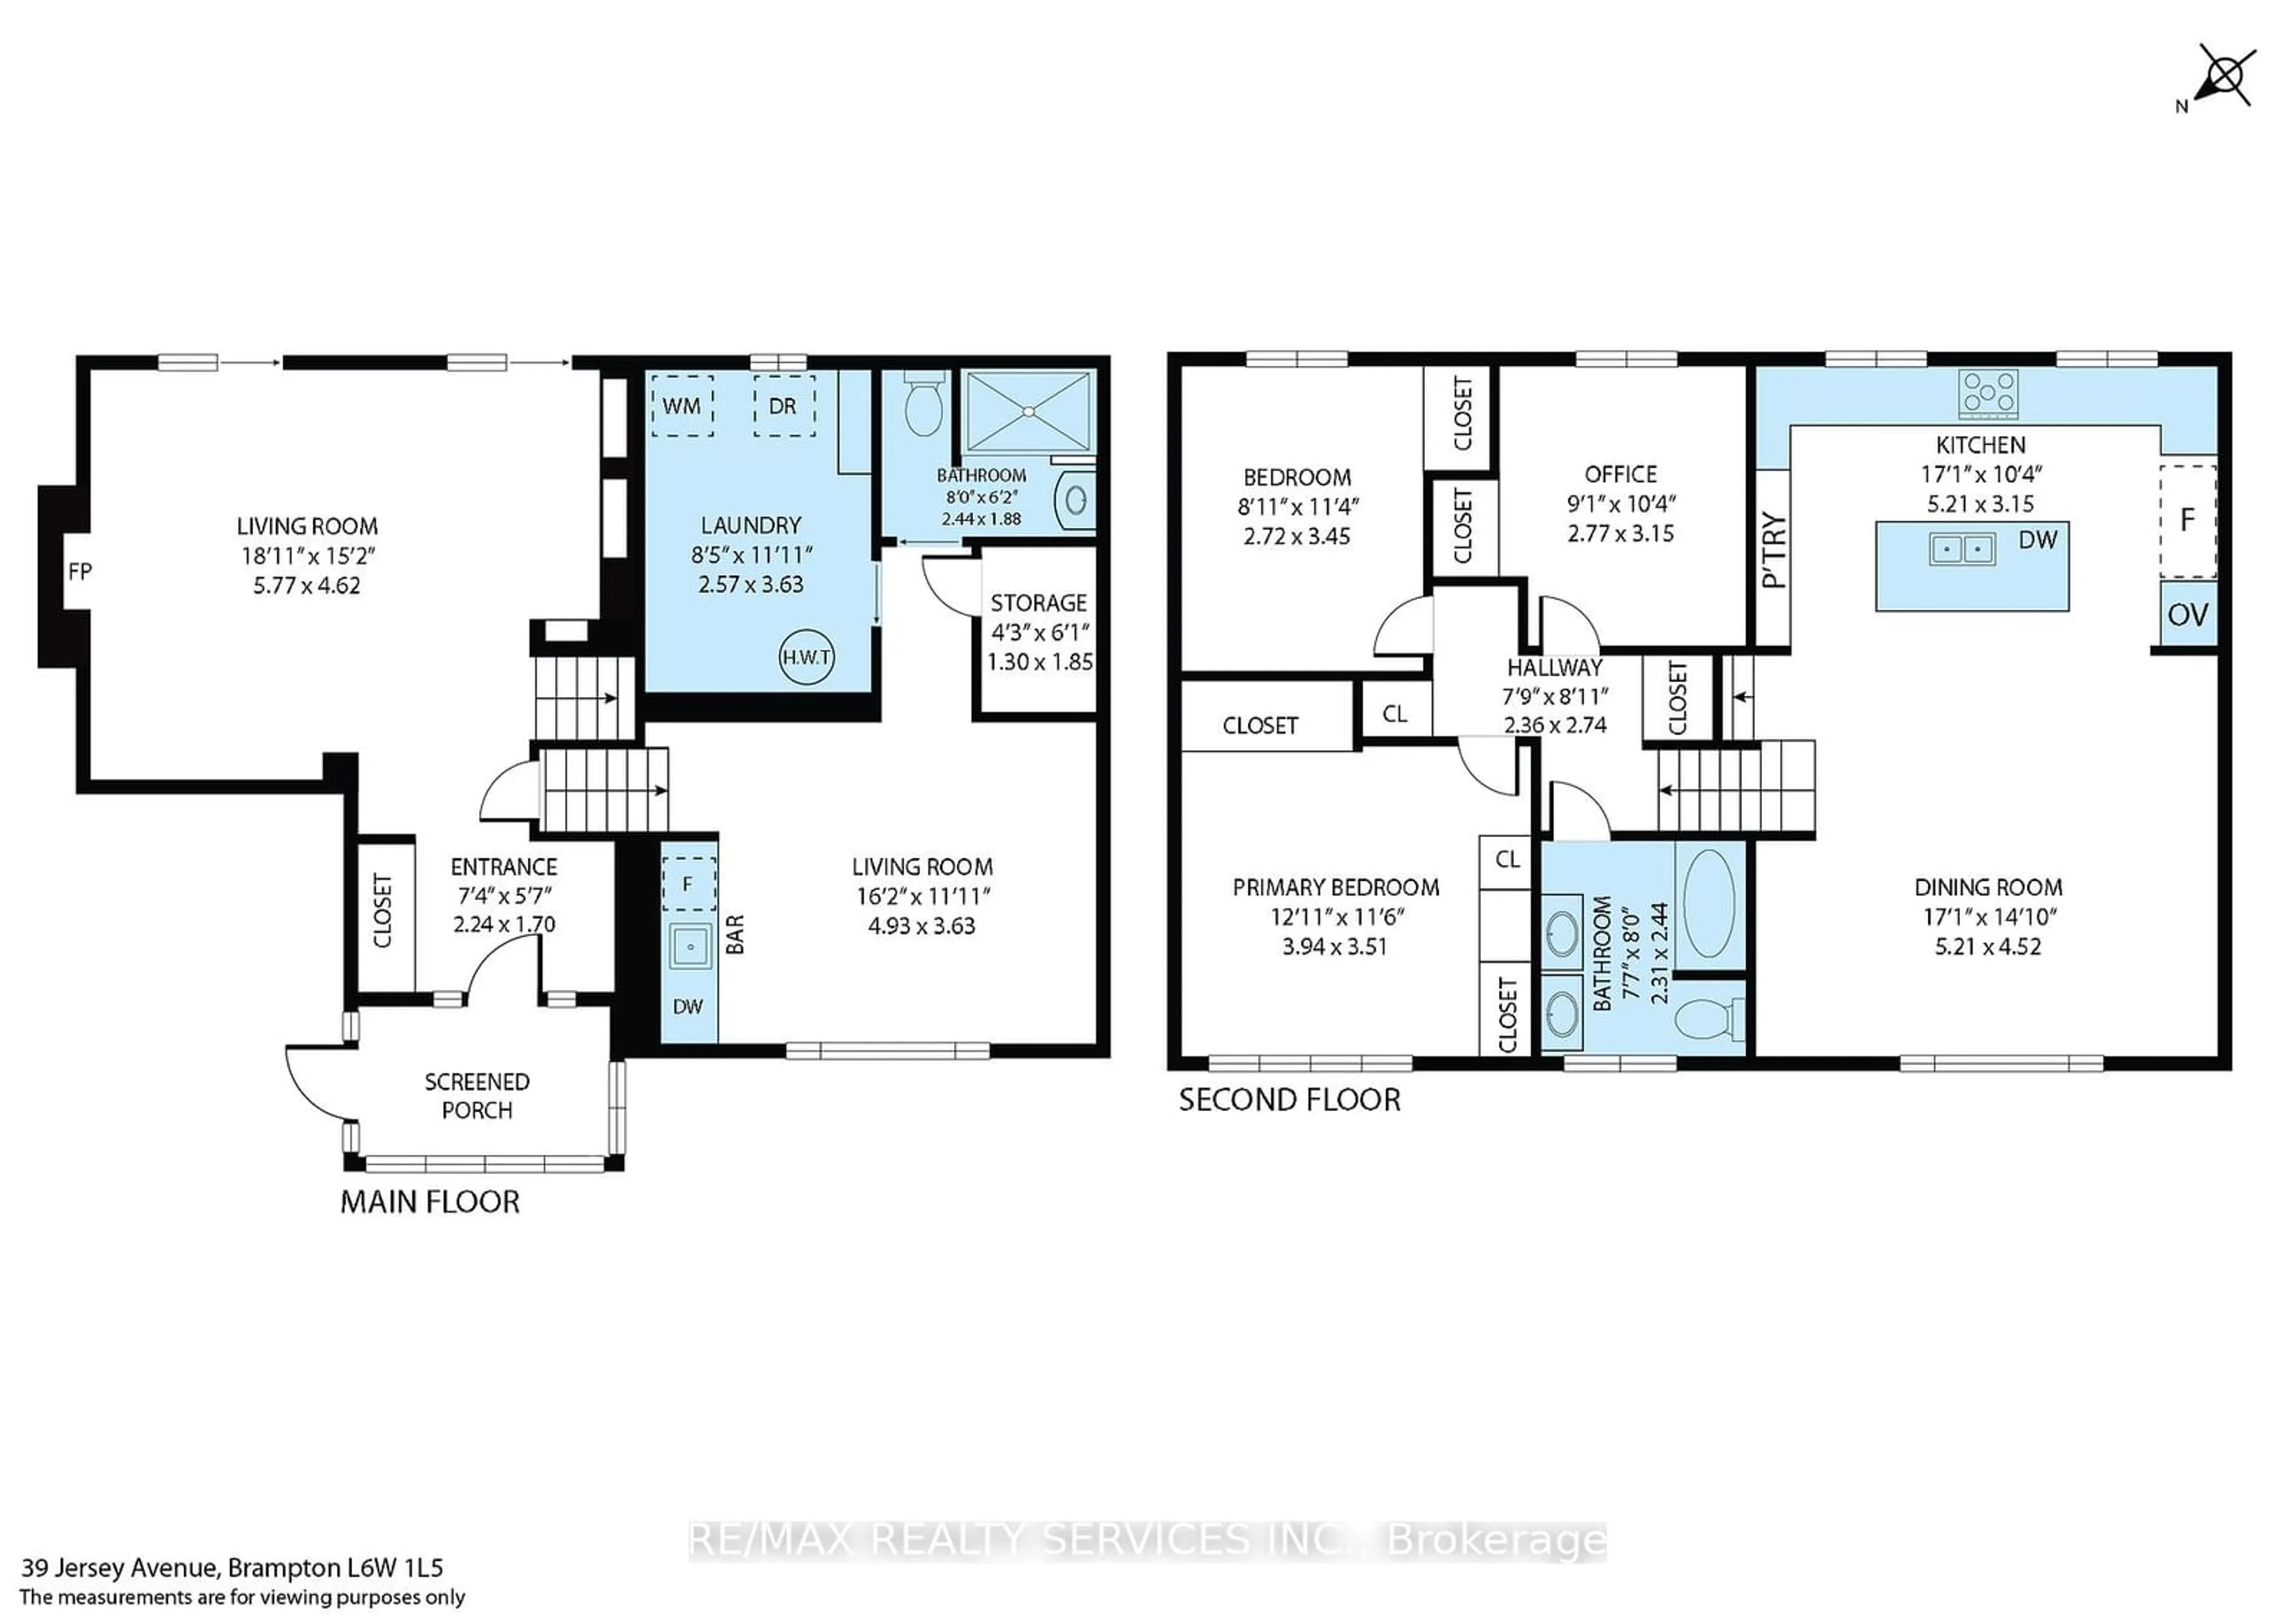 Floor plan for 39 Jersey Ave, Brampton Ontario L6W 1L5